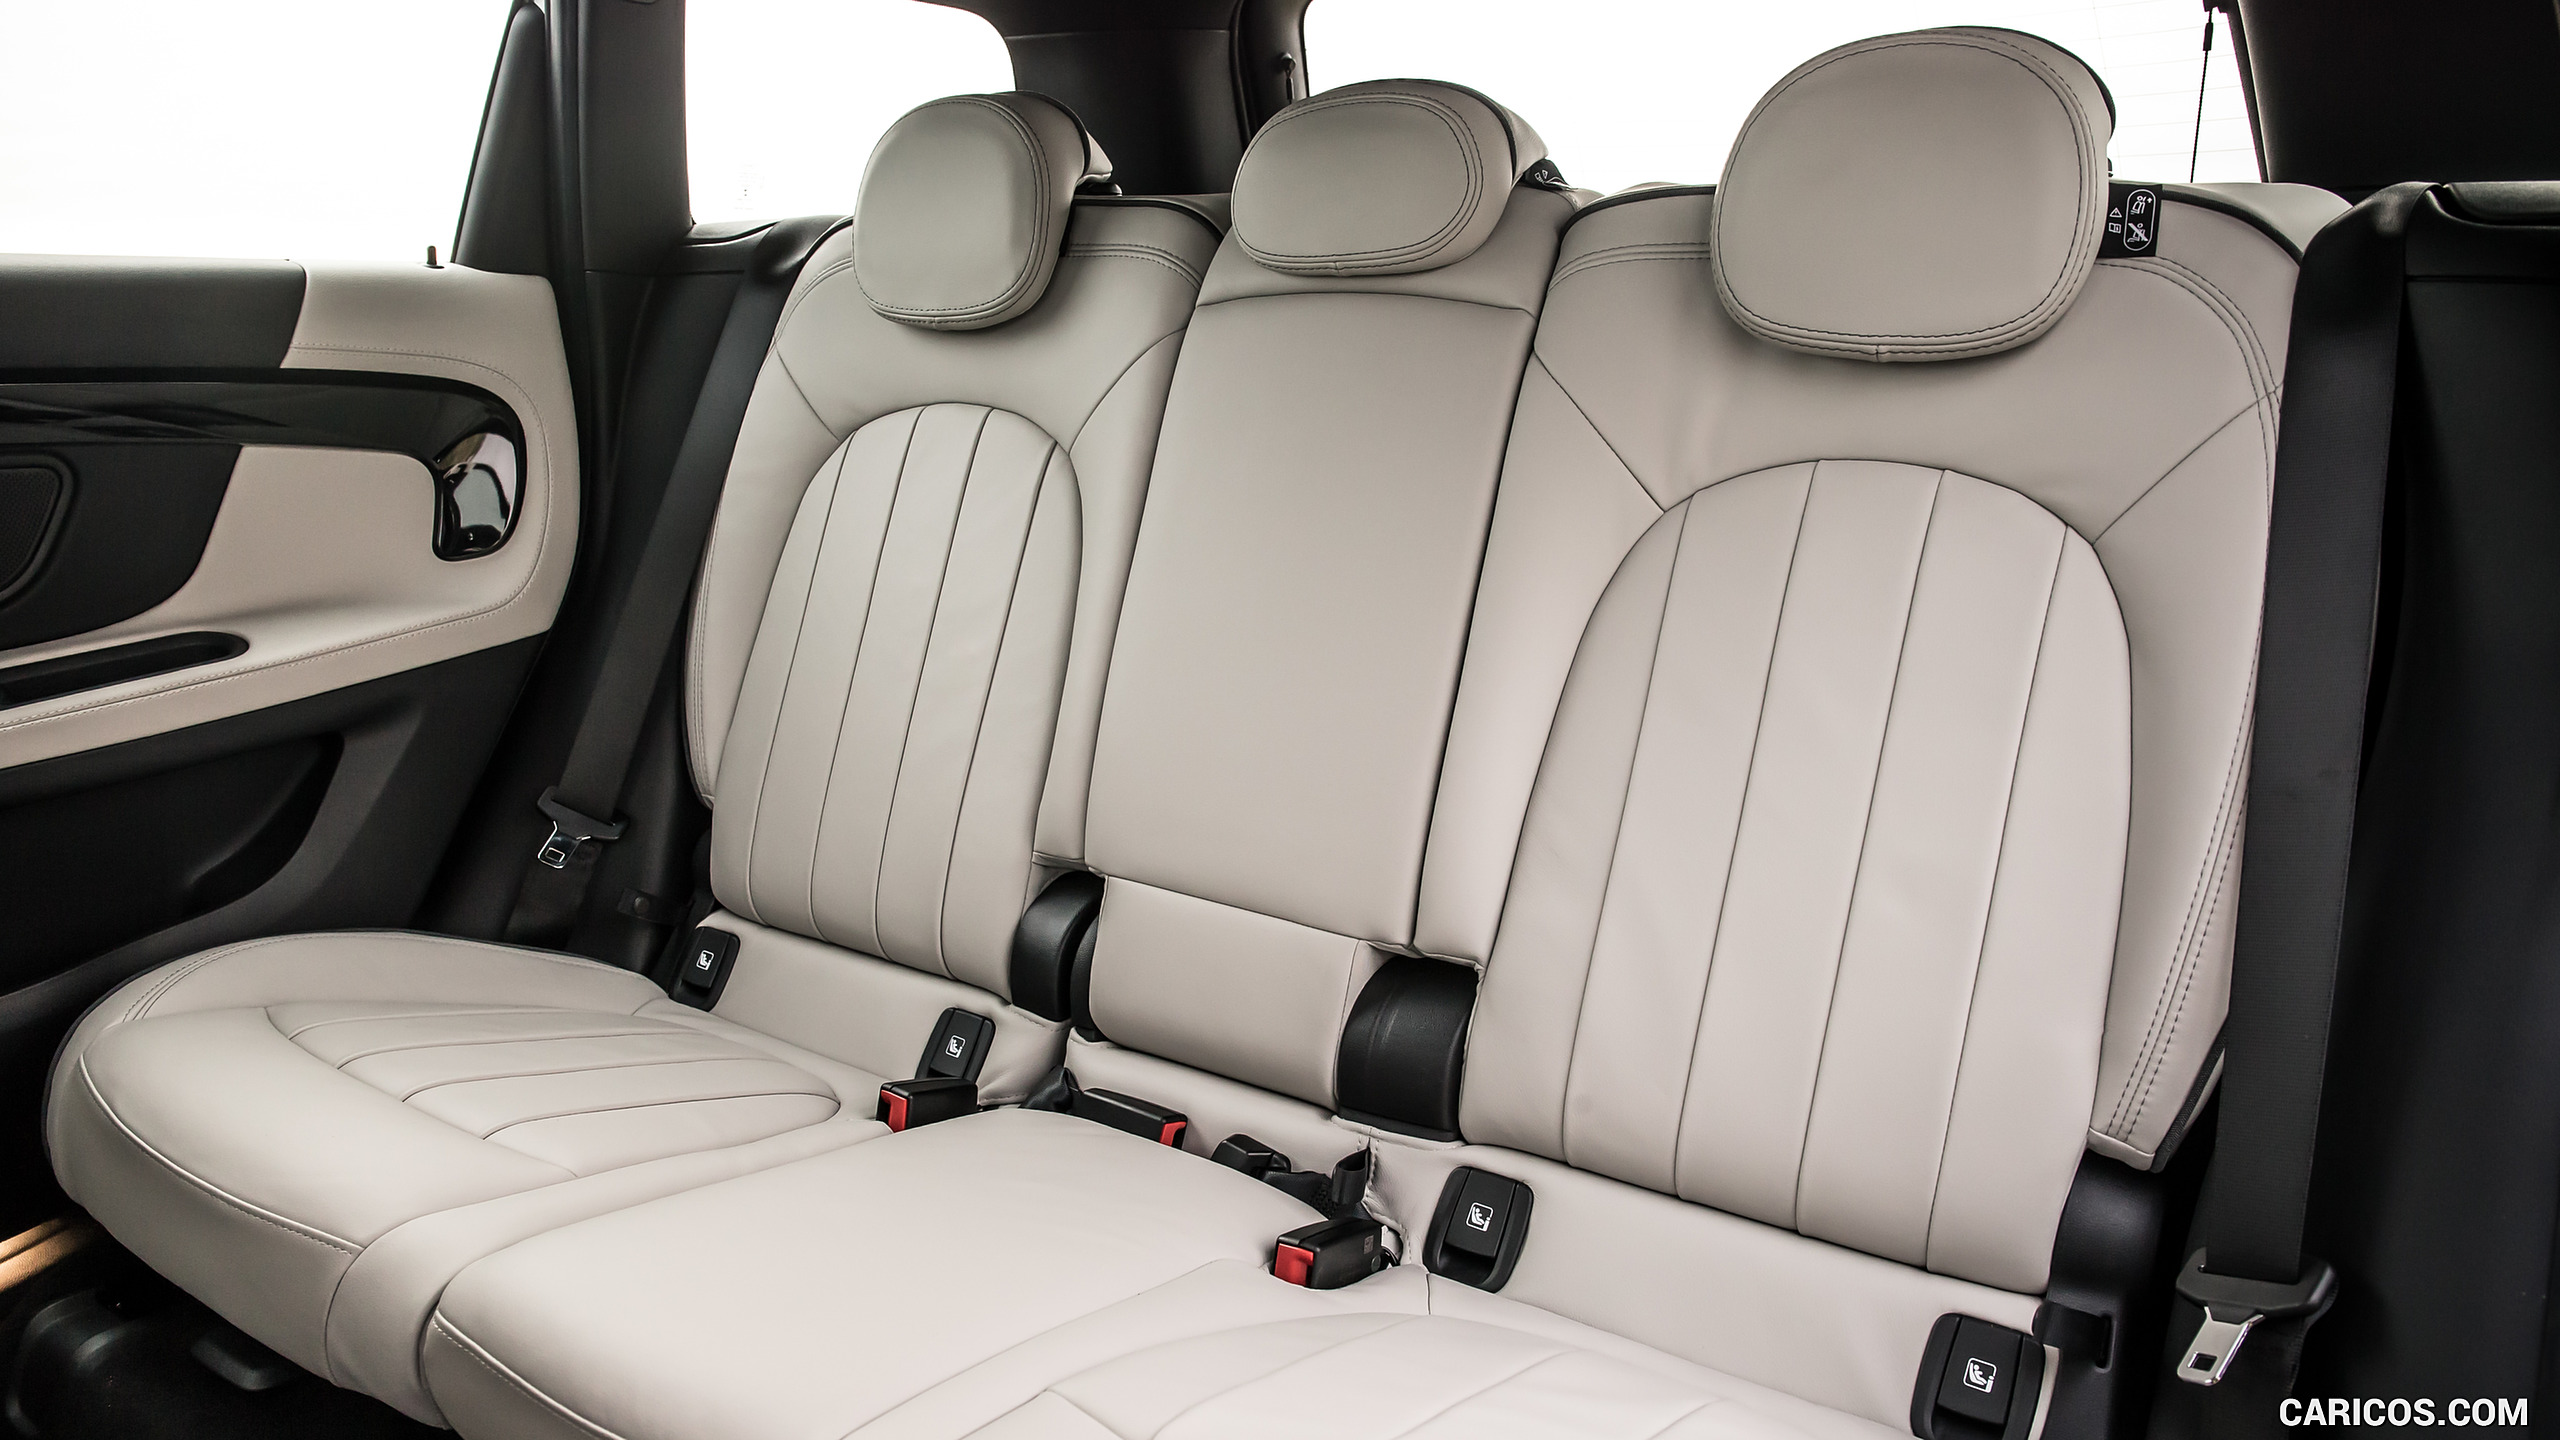 2017 MINI Cooper S Countryman (UK-Spec) - Interior, Rear Seats, #367 of 372